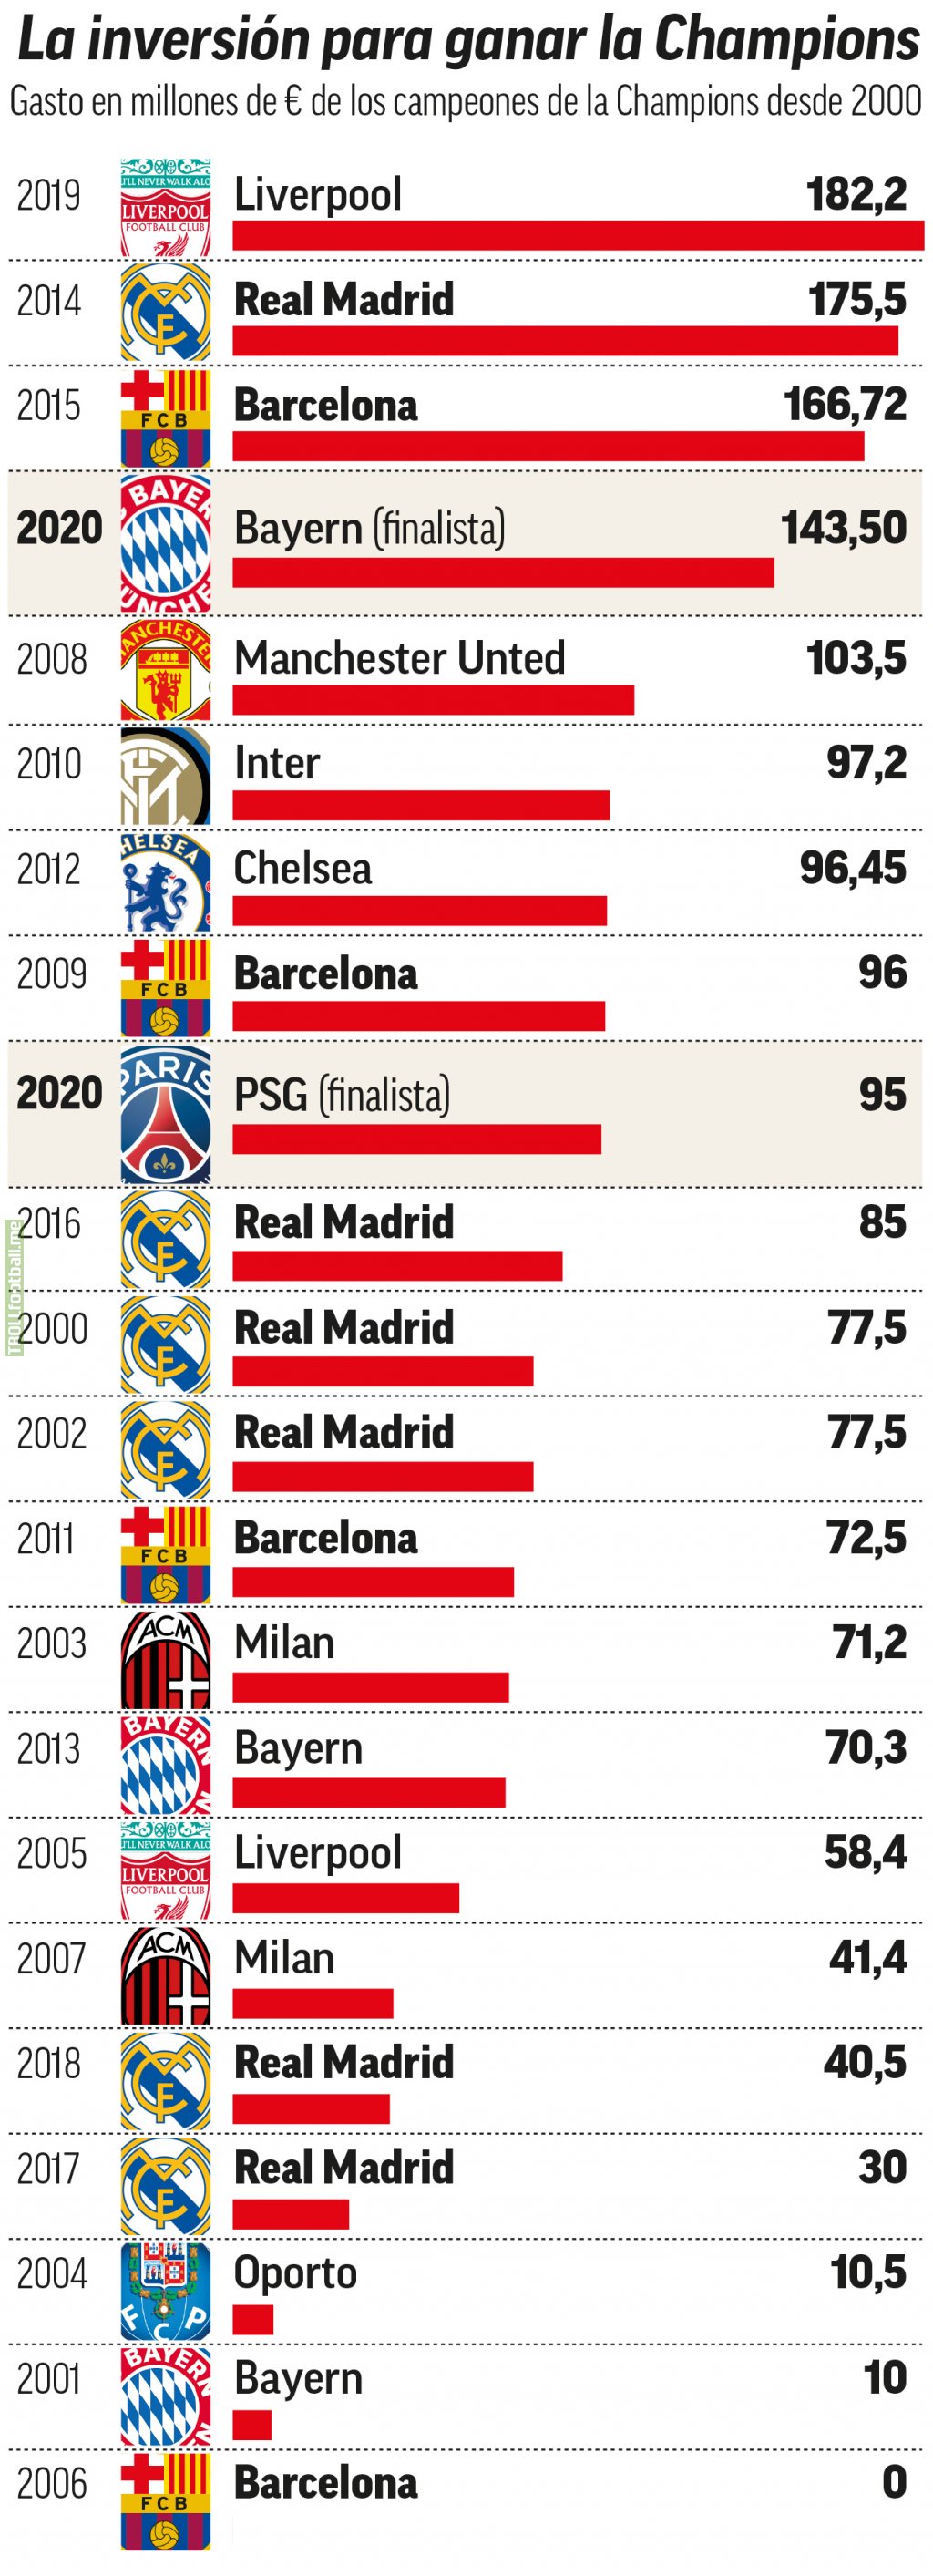 [MARCA] How much money each UEFA Champions League winner spent (since 2000)